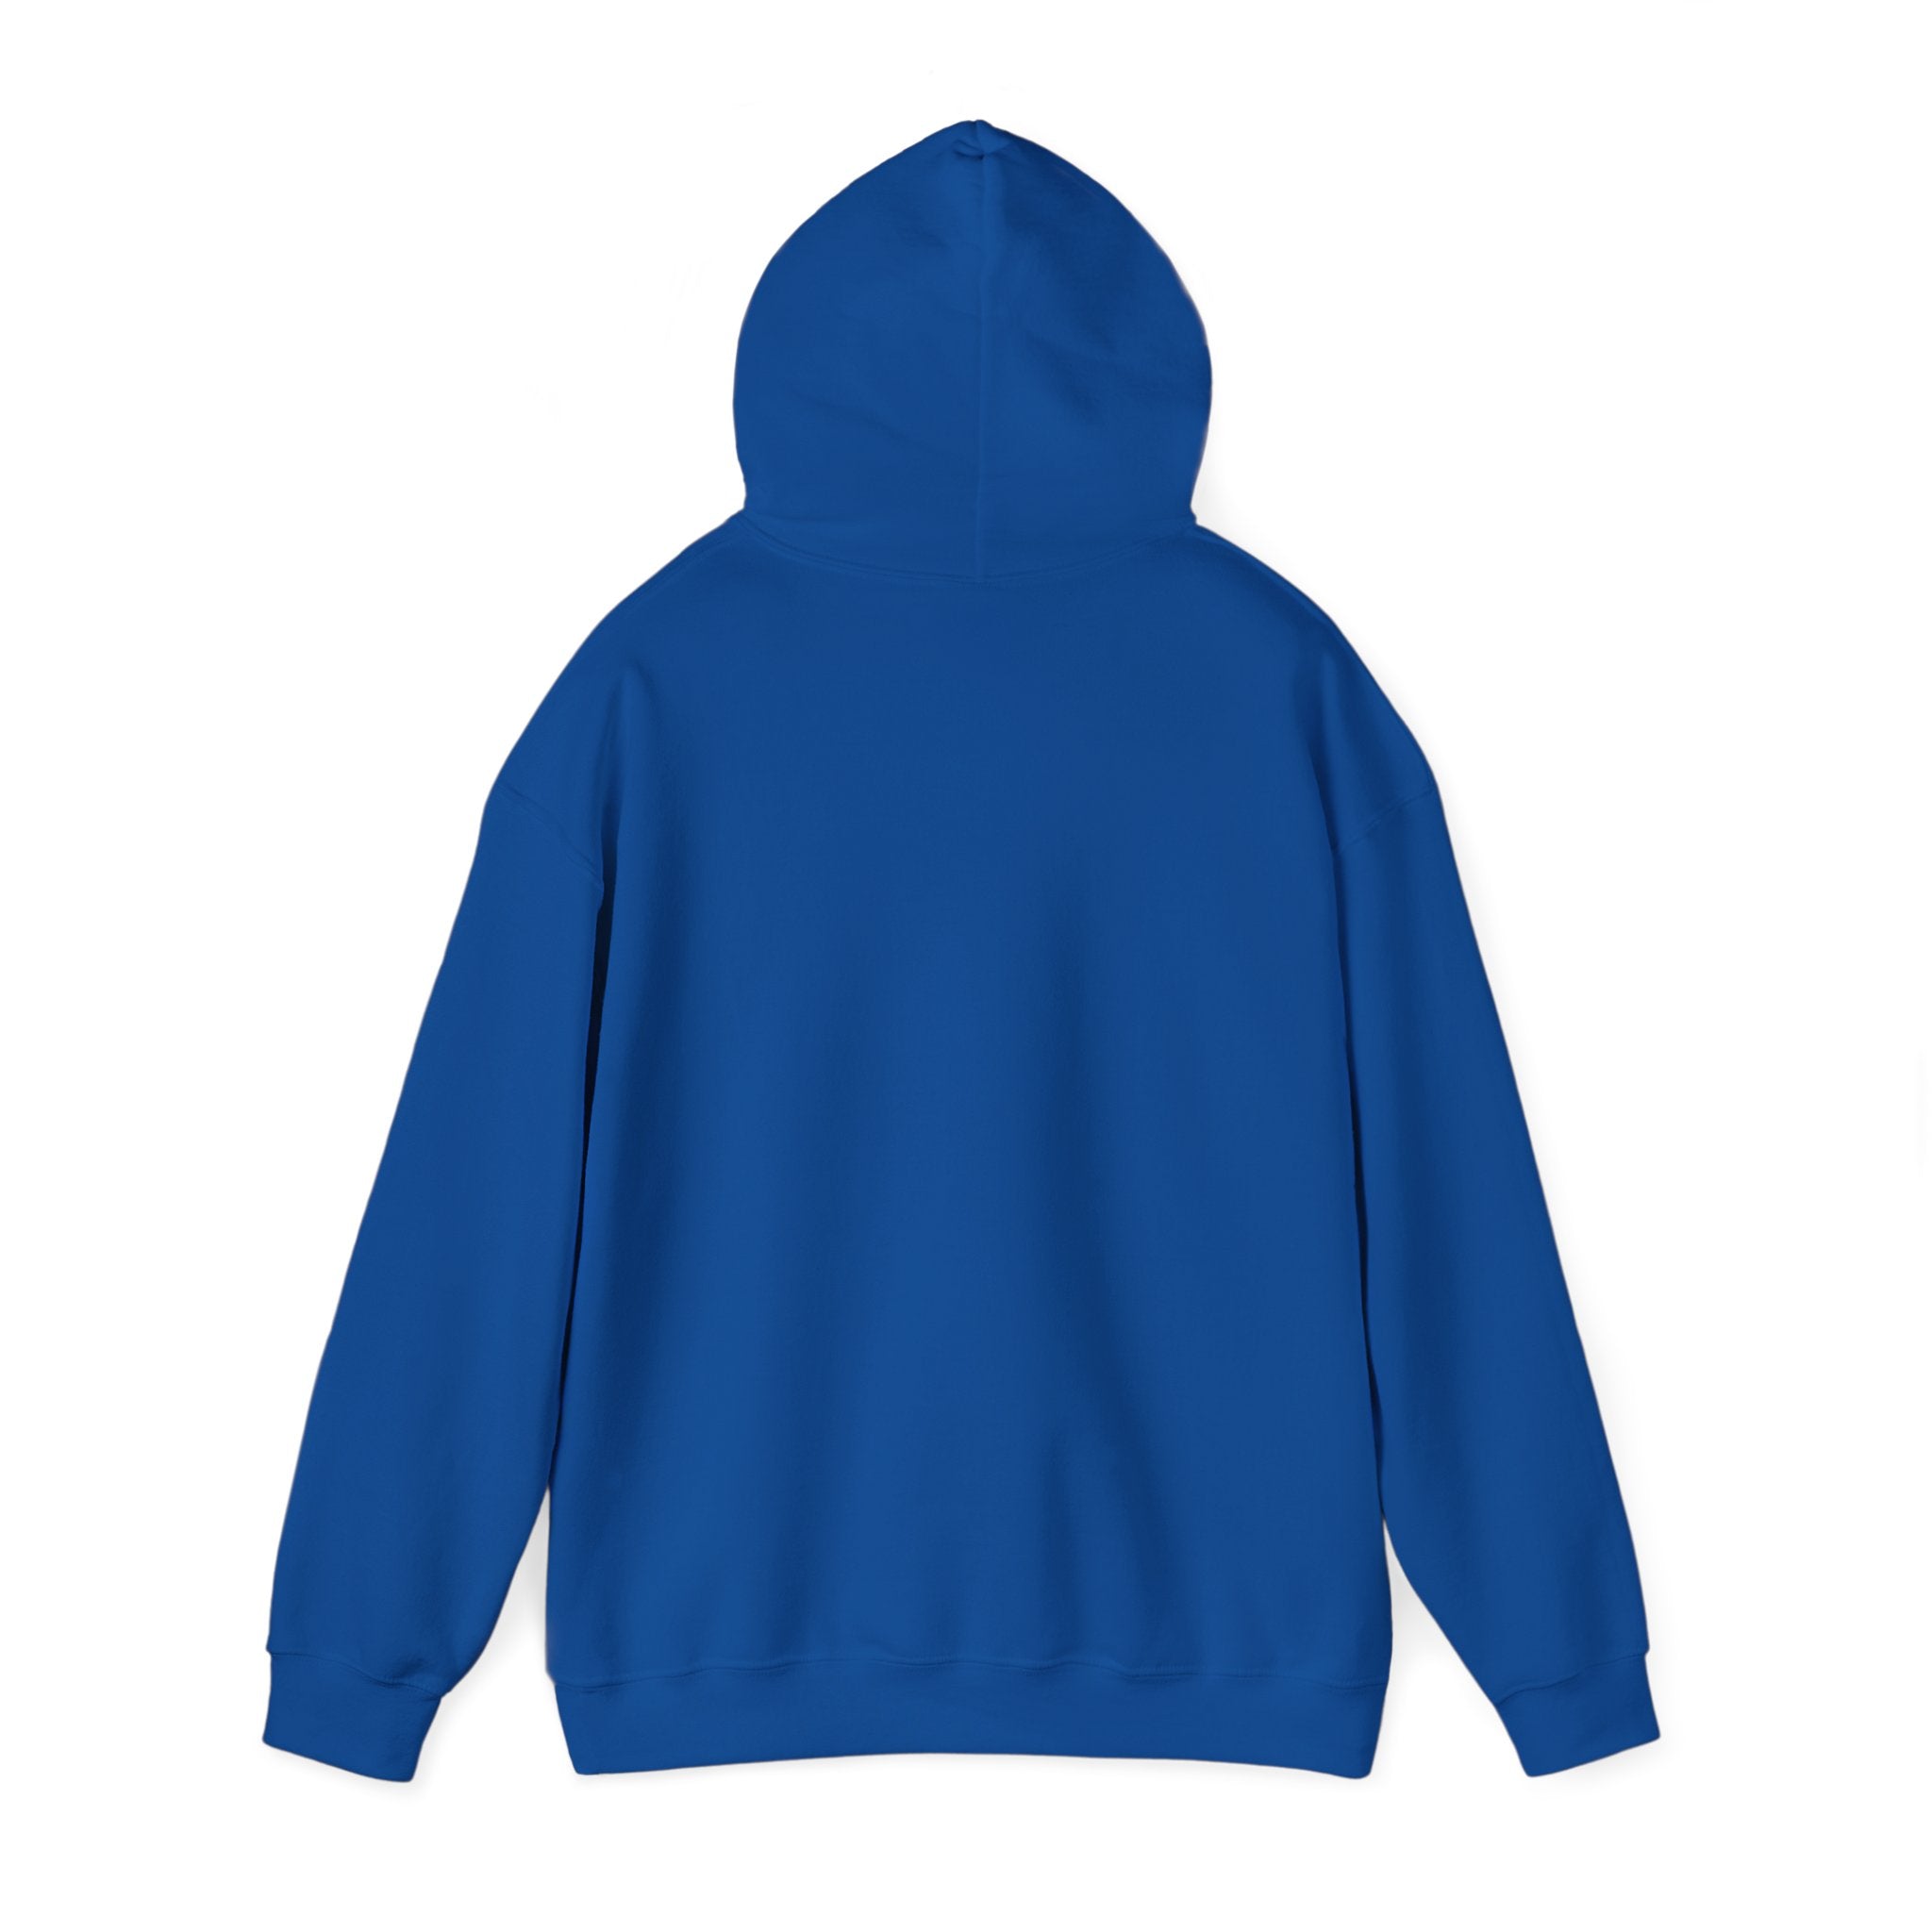 Reptile Unisex Heavy Blend™ Hooded Sweatshirt